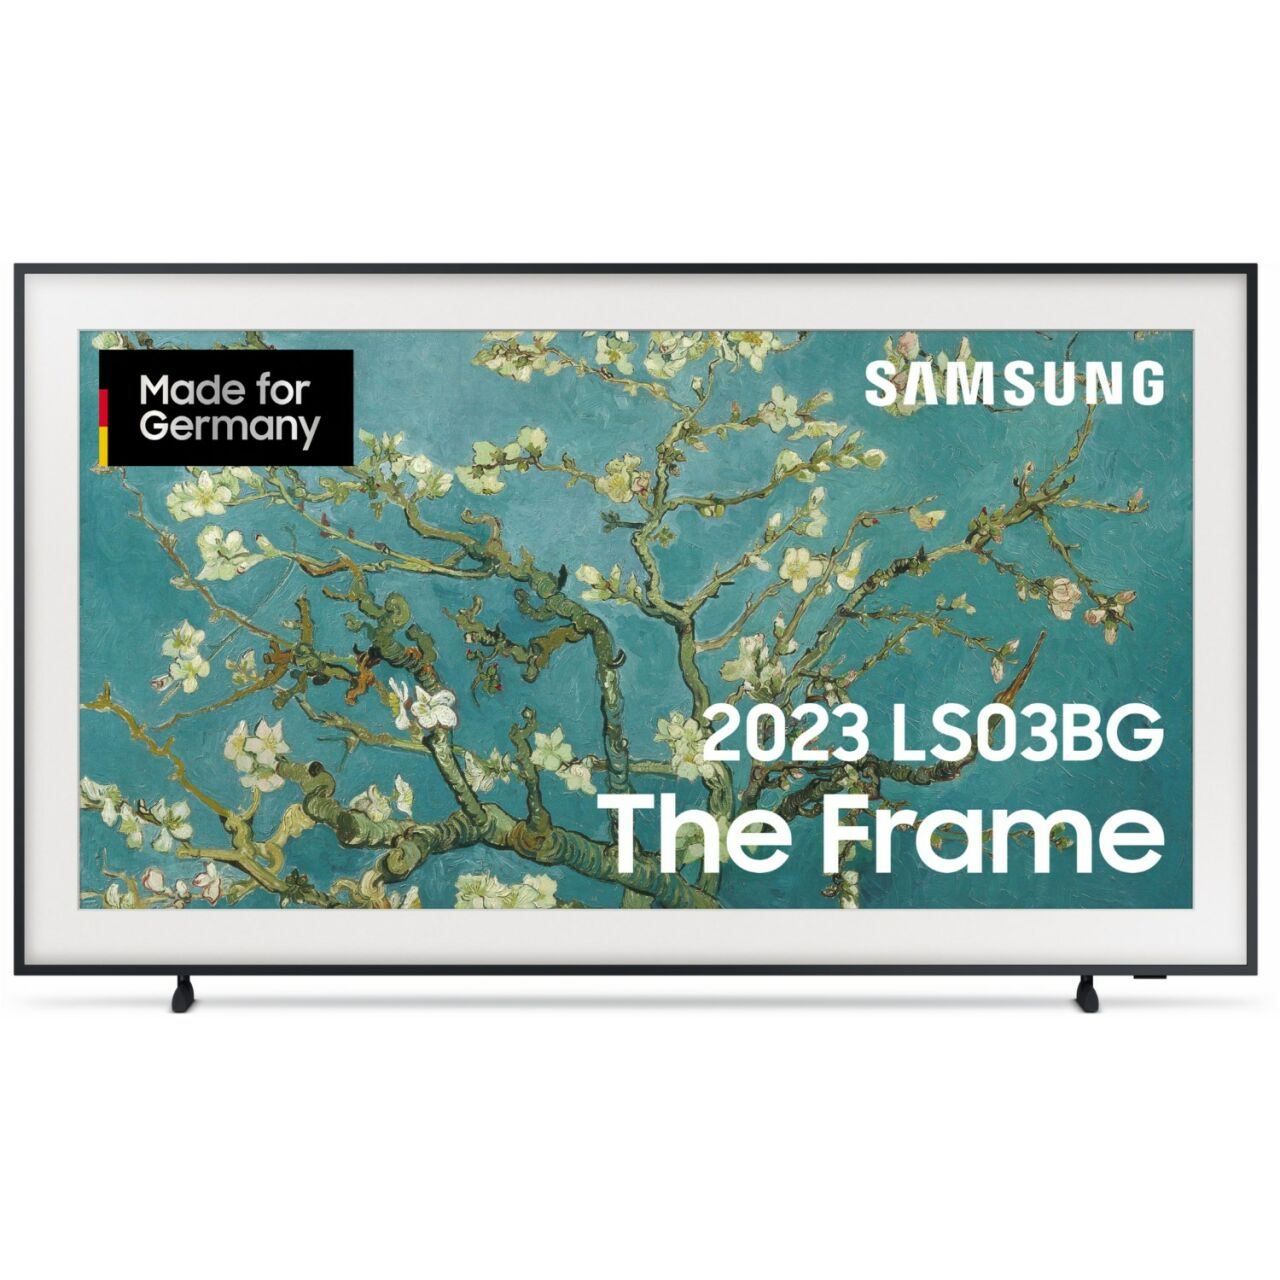 Samsung GQ65LS03BGU The Frame (2023)